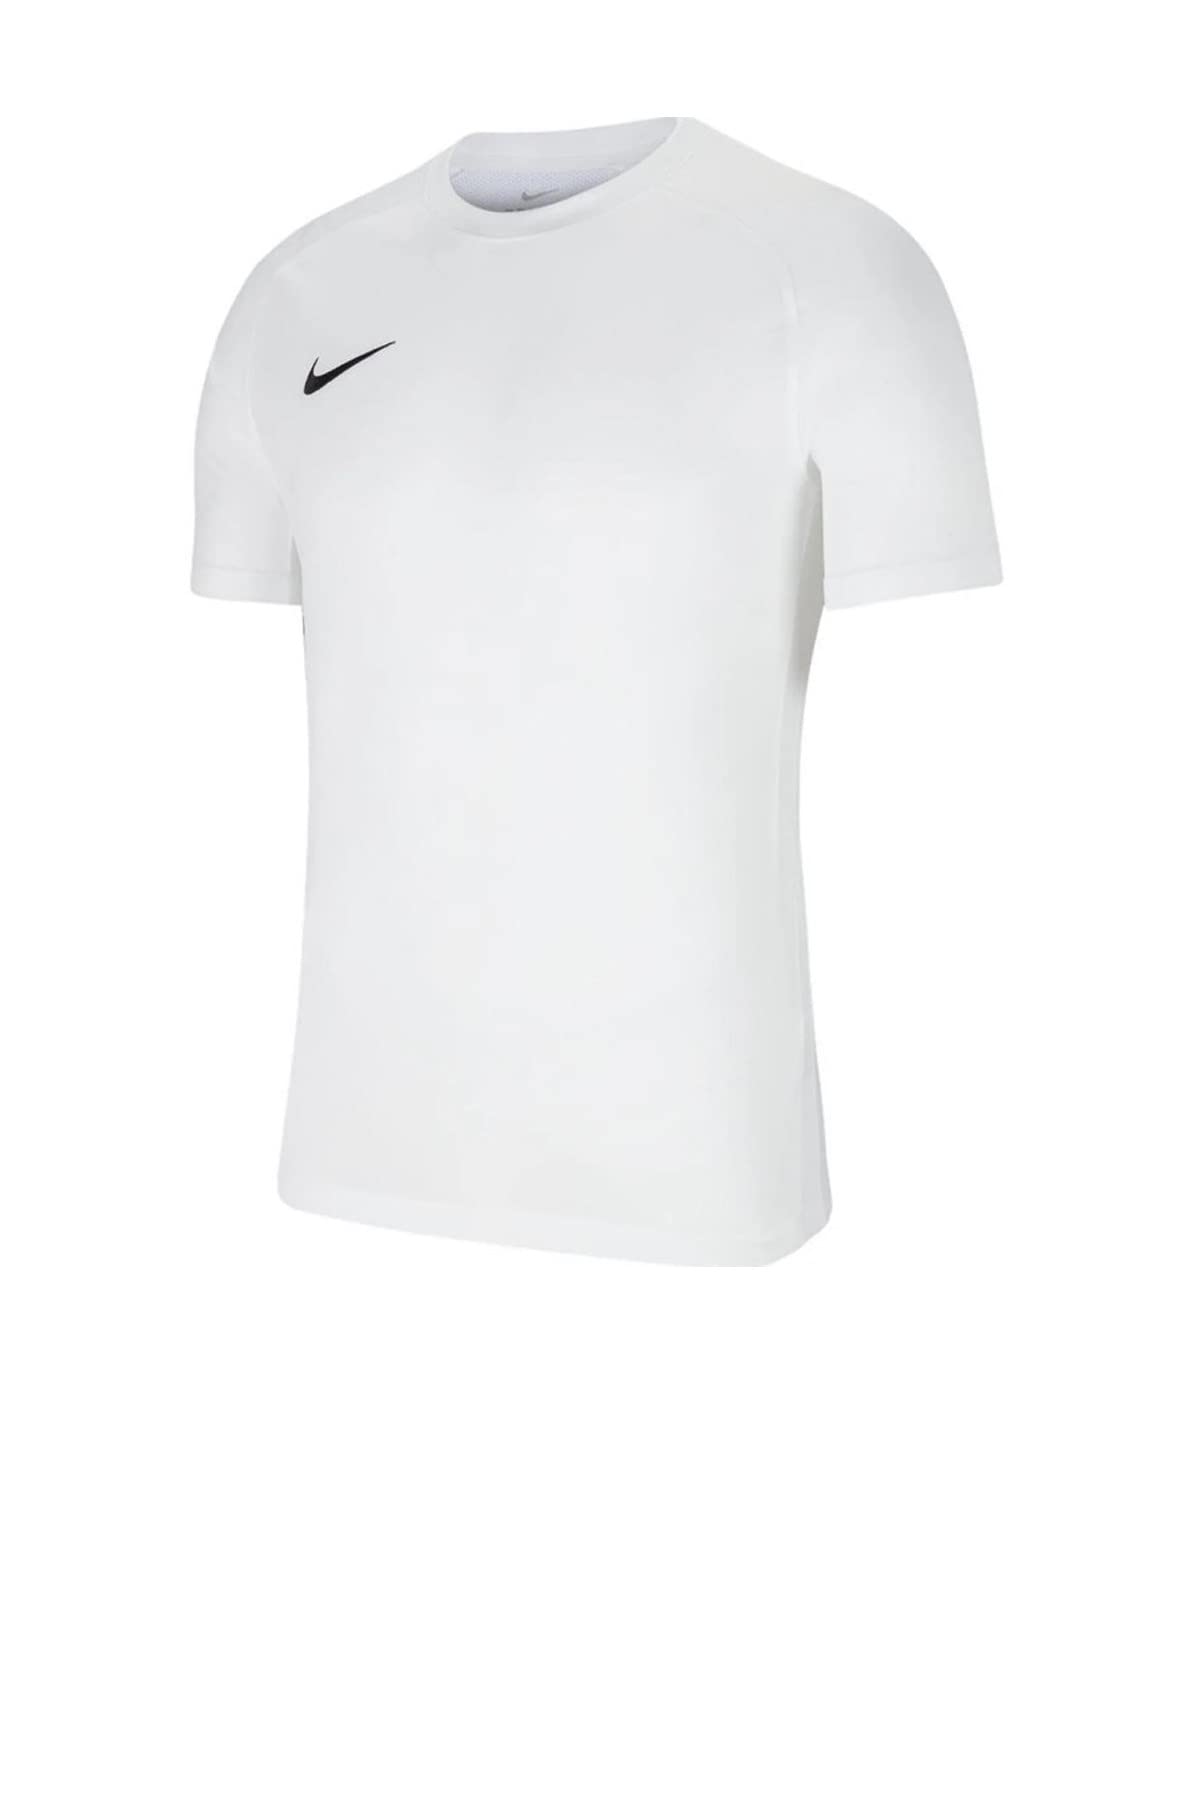 Nike Mens Dri-FIT Strike II Shirt, Weiß/Schwarz, XL